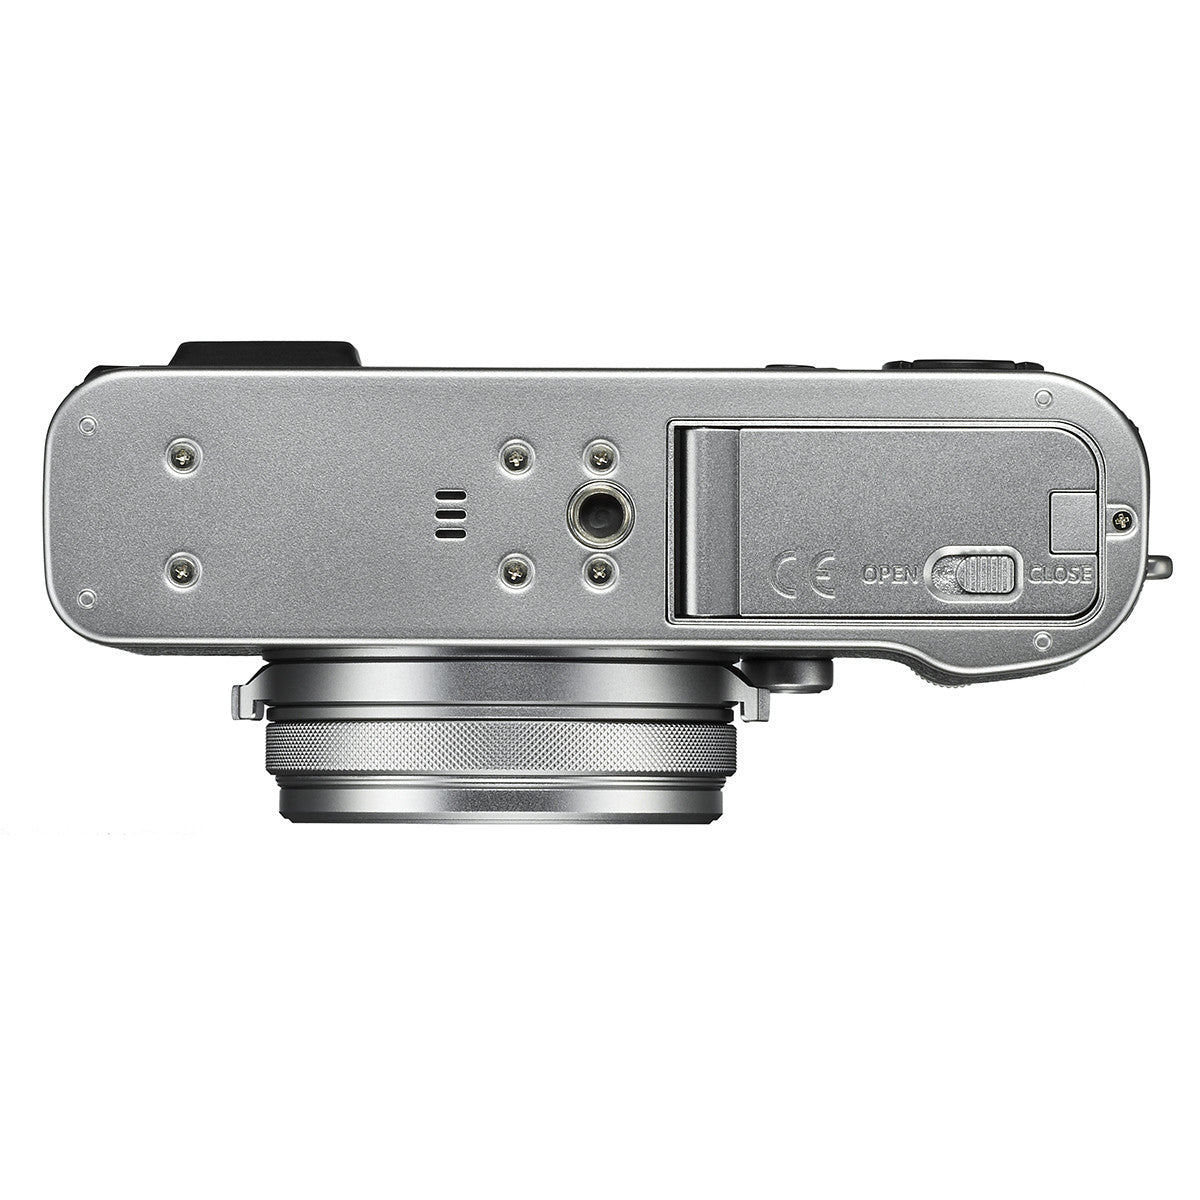 Fujifilm X100F Digital Camera (Silver), camera point & shoot cameras, Fujifilm - Pictureline  - 8